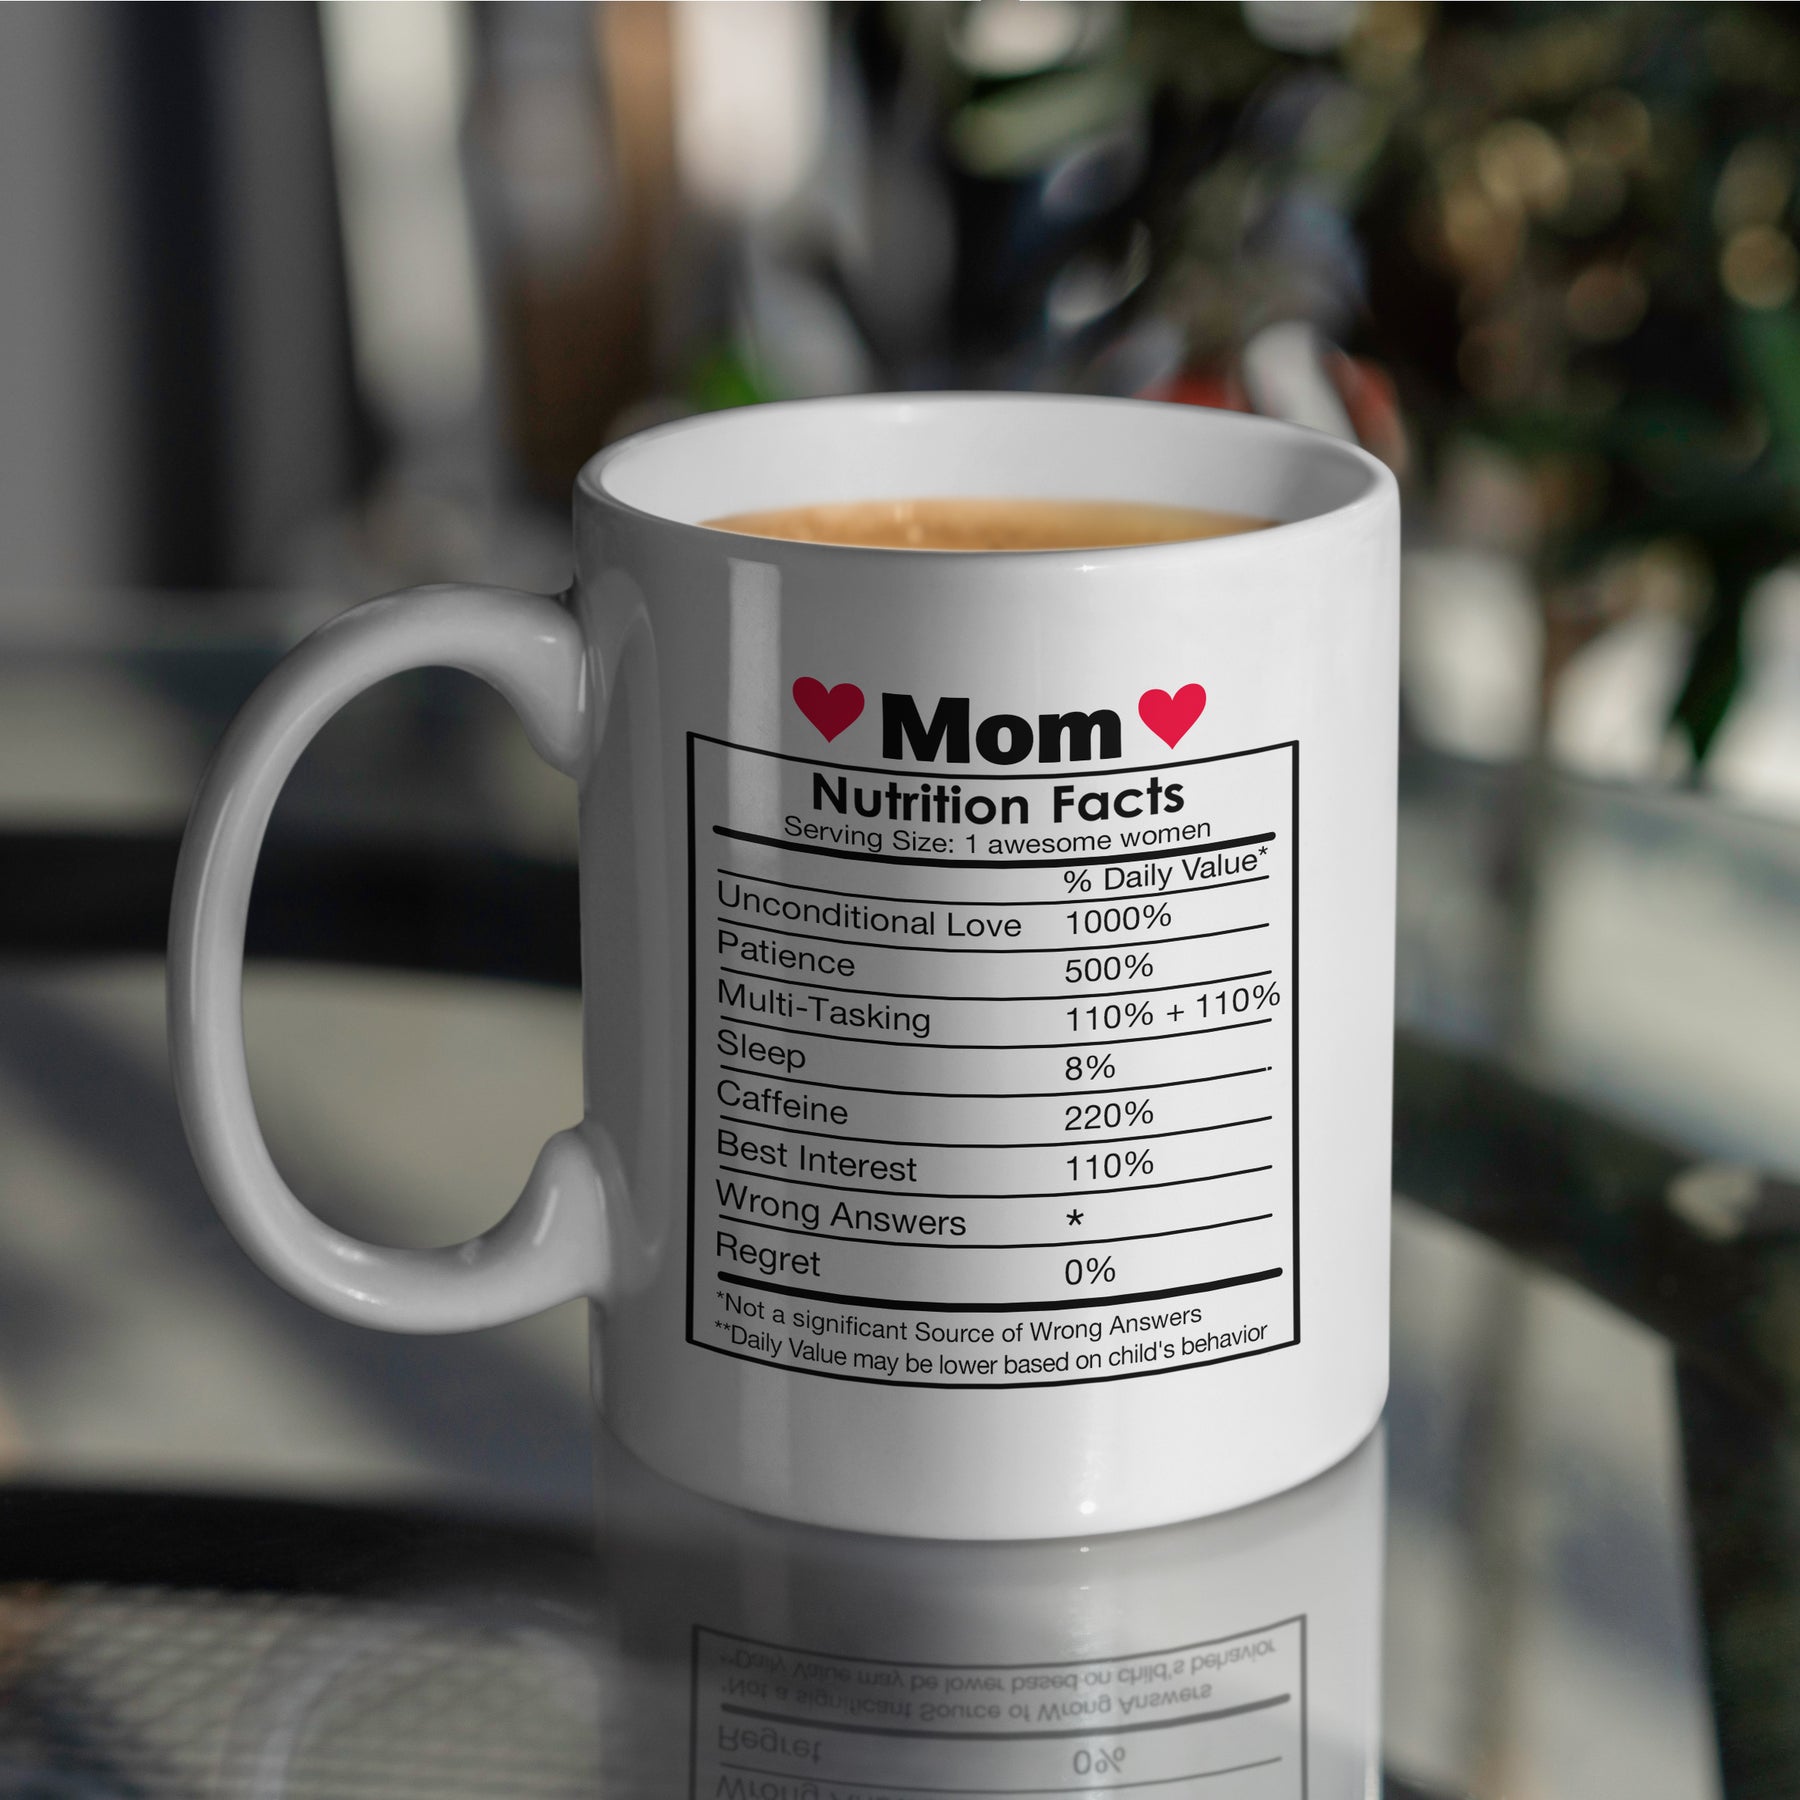 Nutrition Facts” Large 15oz Mug - Funny Gift for Mom, Grandma